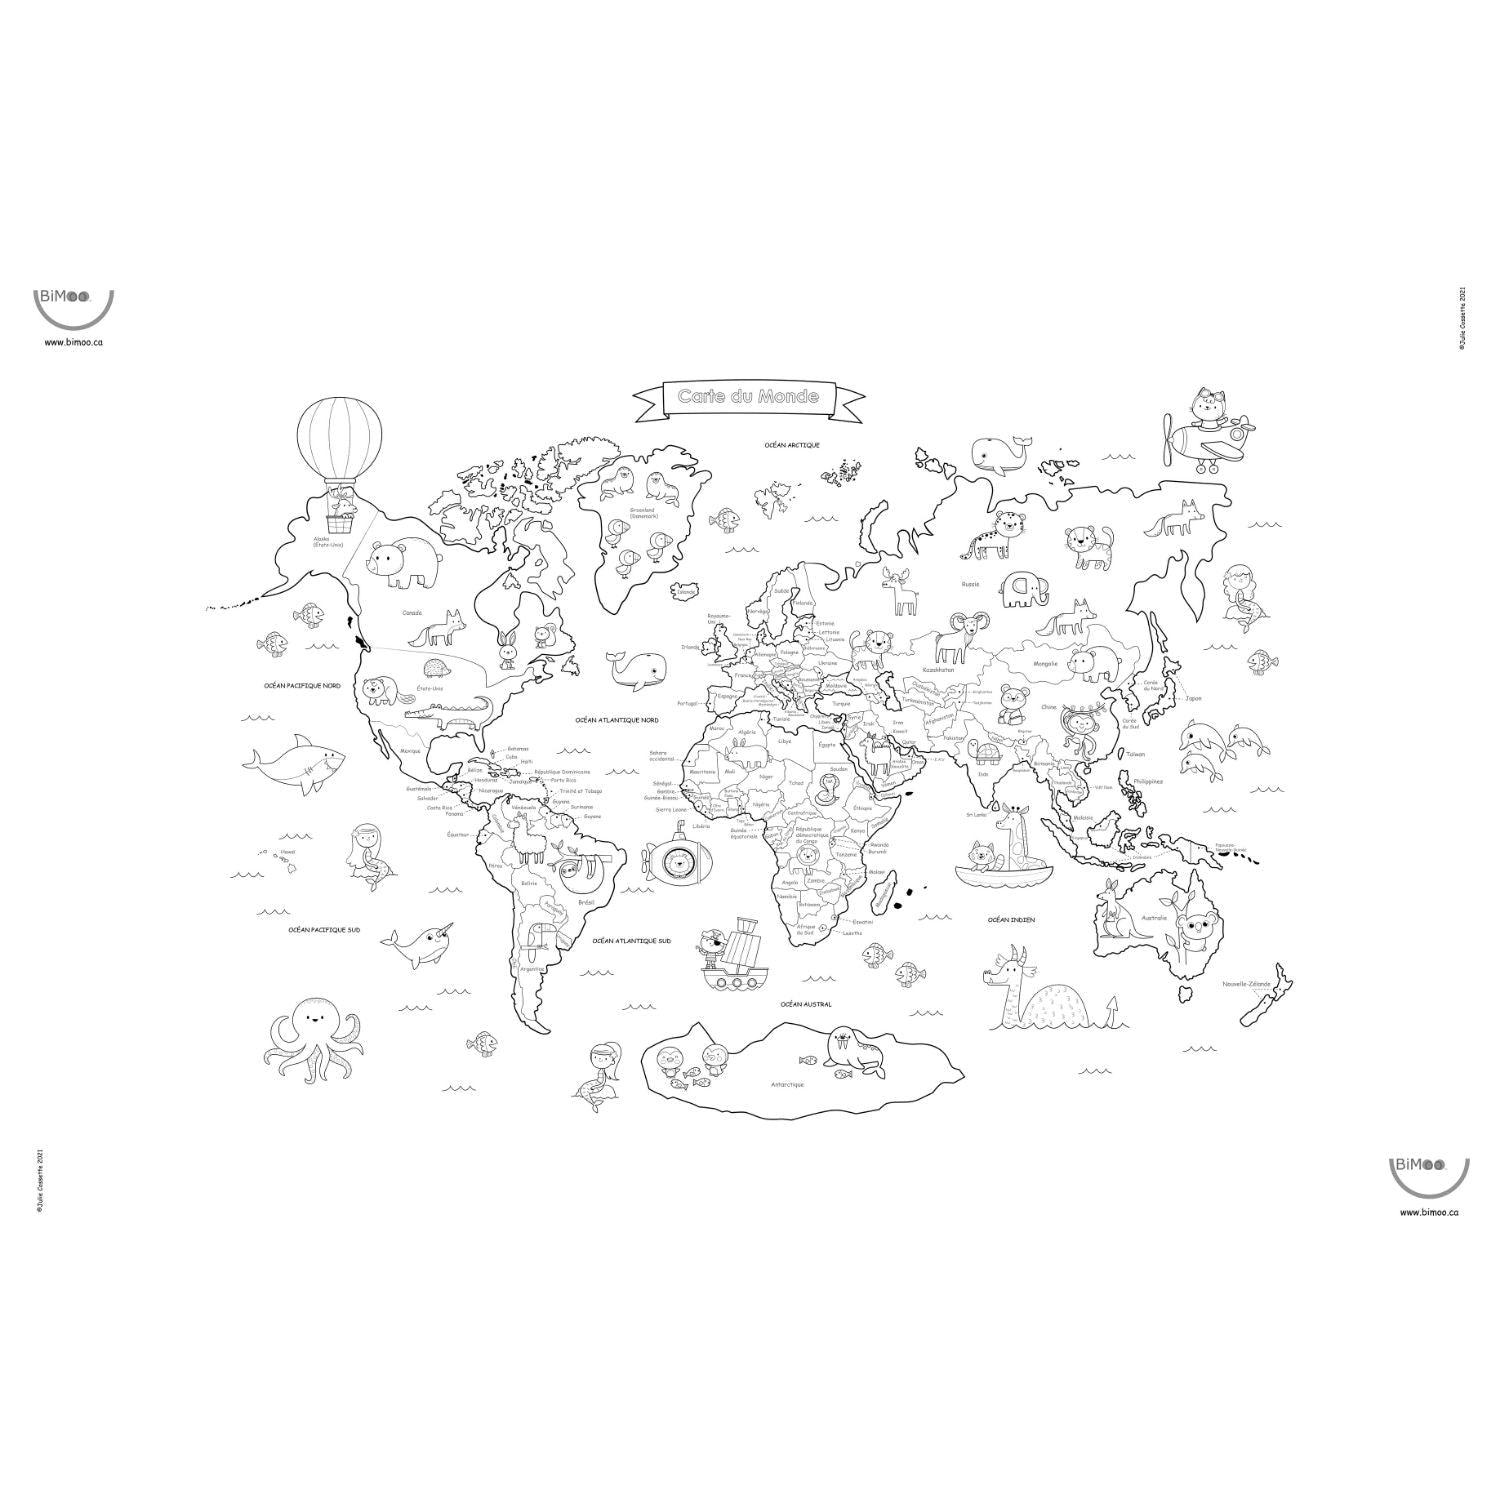 world map tablecloth design carte du monde nappe a colorier bimoo 45x45in